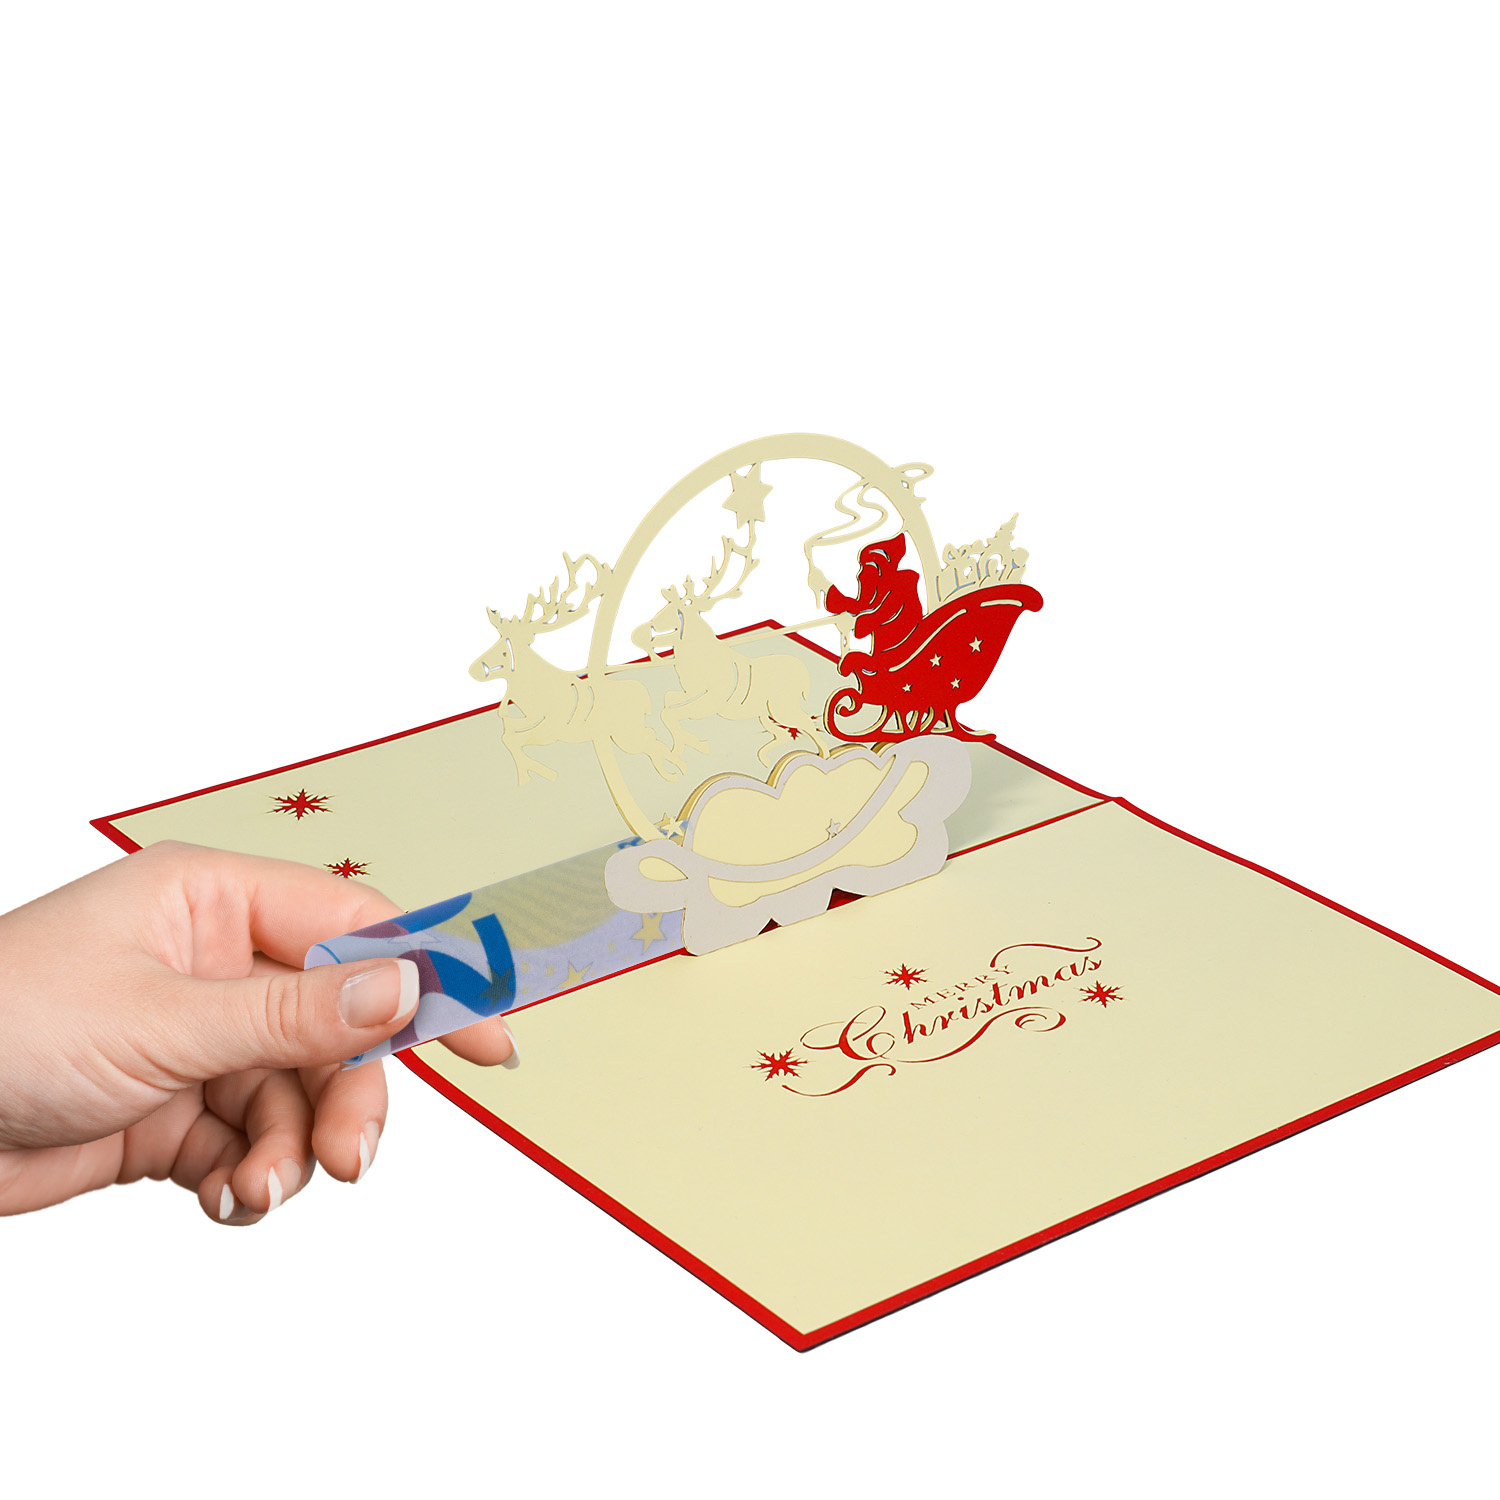 LINPOPUP Pop Up 3D Card, Christmas Card, Greeting Card, Sleigh Reindeer, LINPopUp®, N424